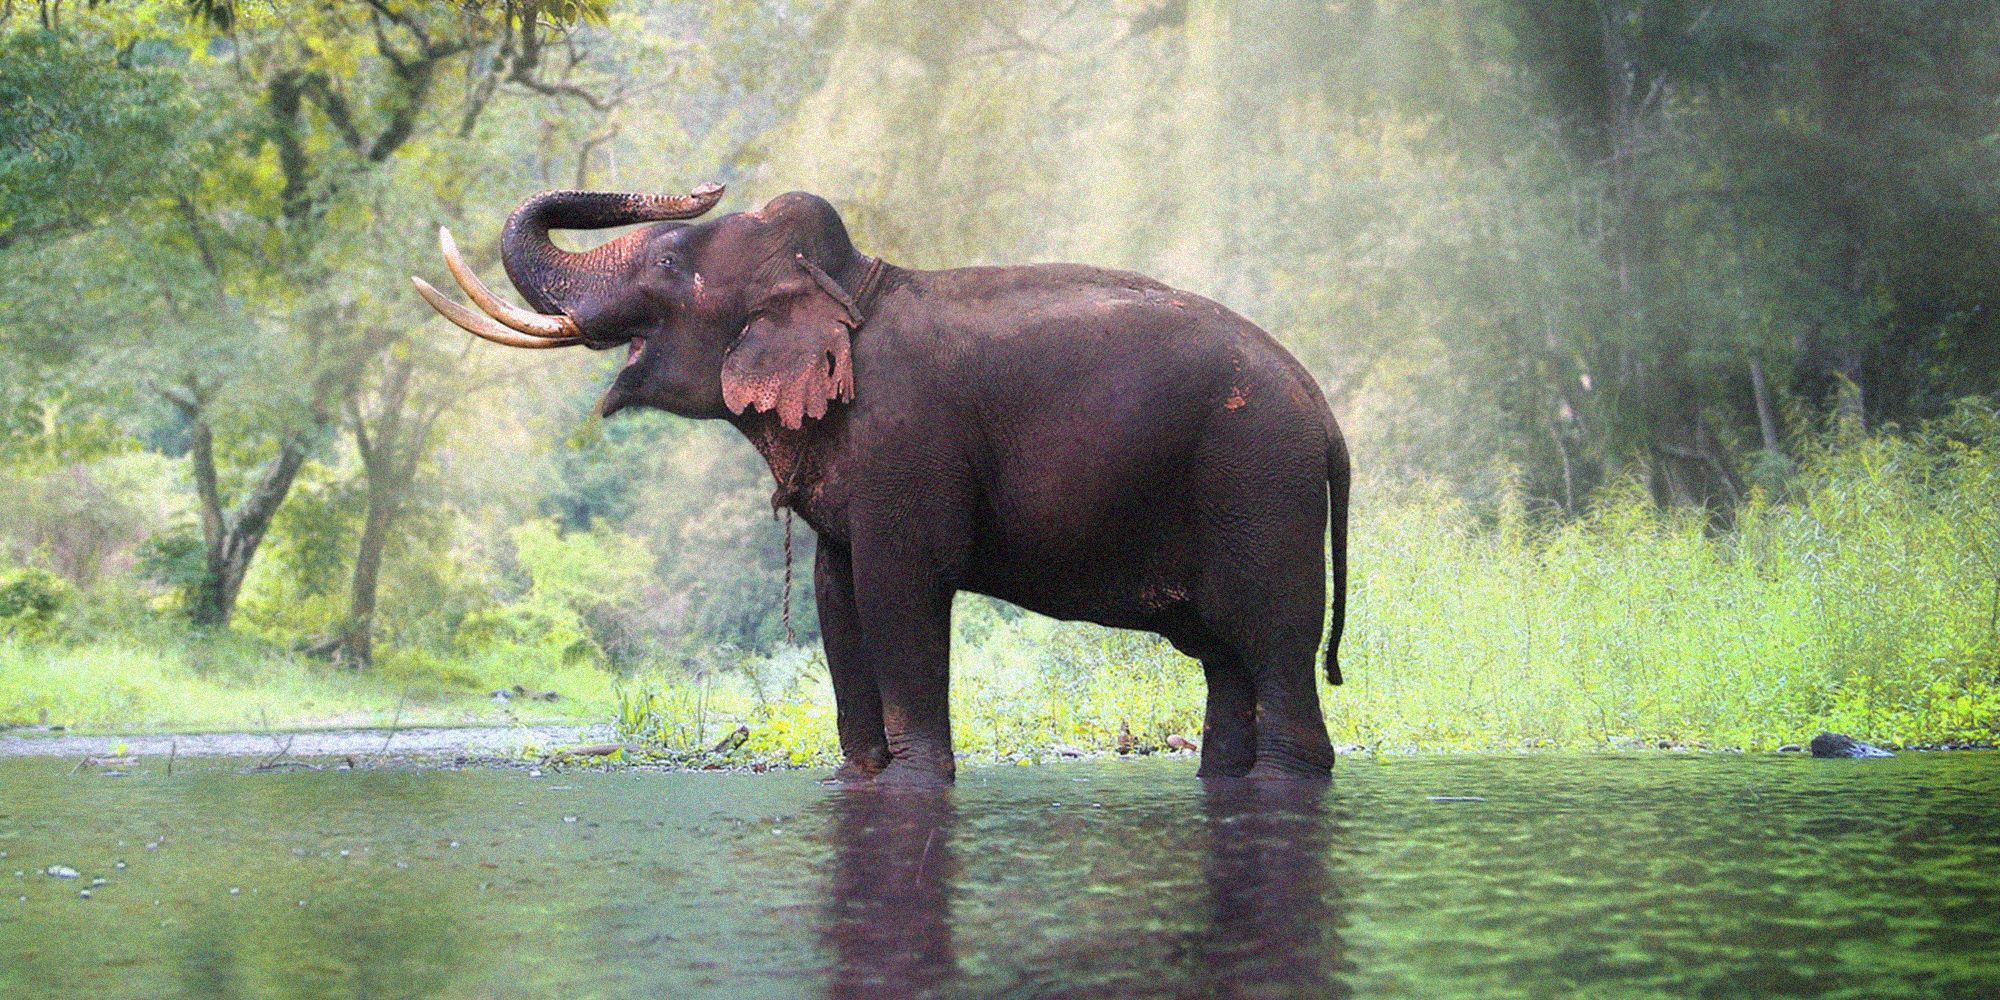 Anantara Resort Thailandia: dormire tra gli elefanti a scopo benefico 